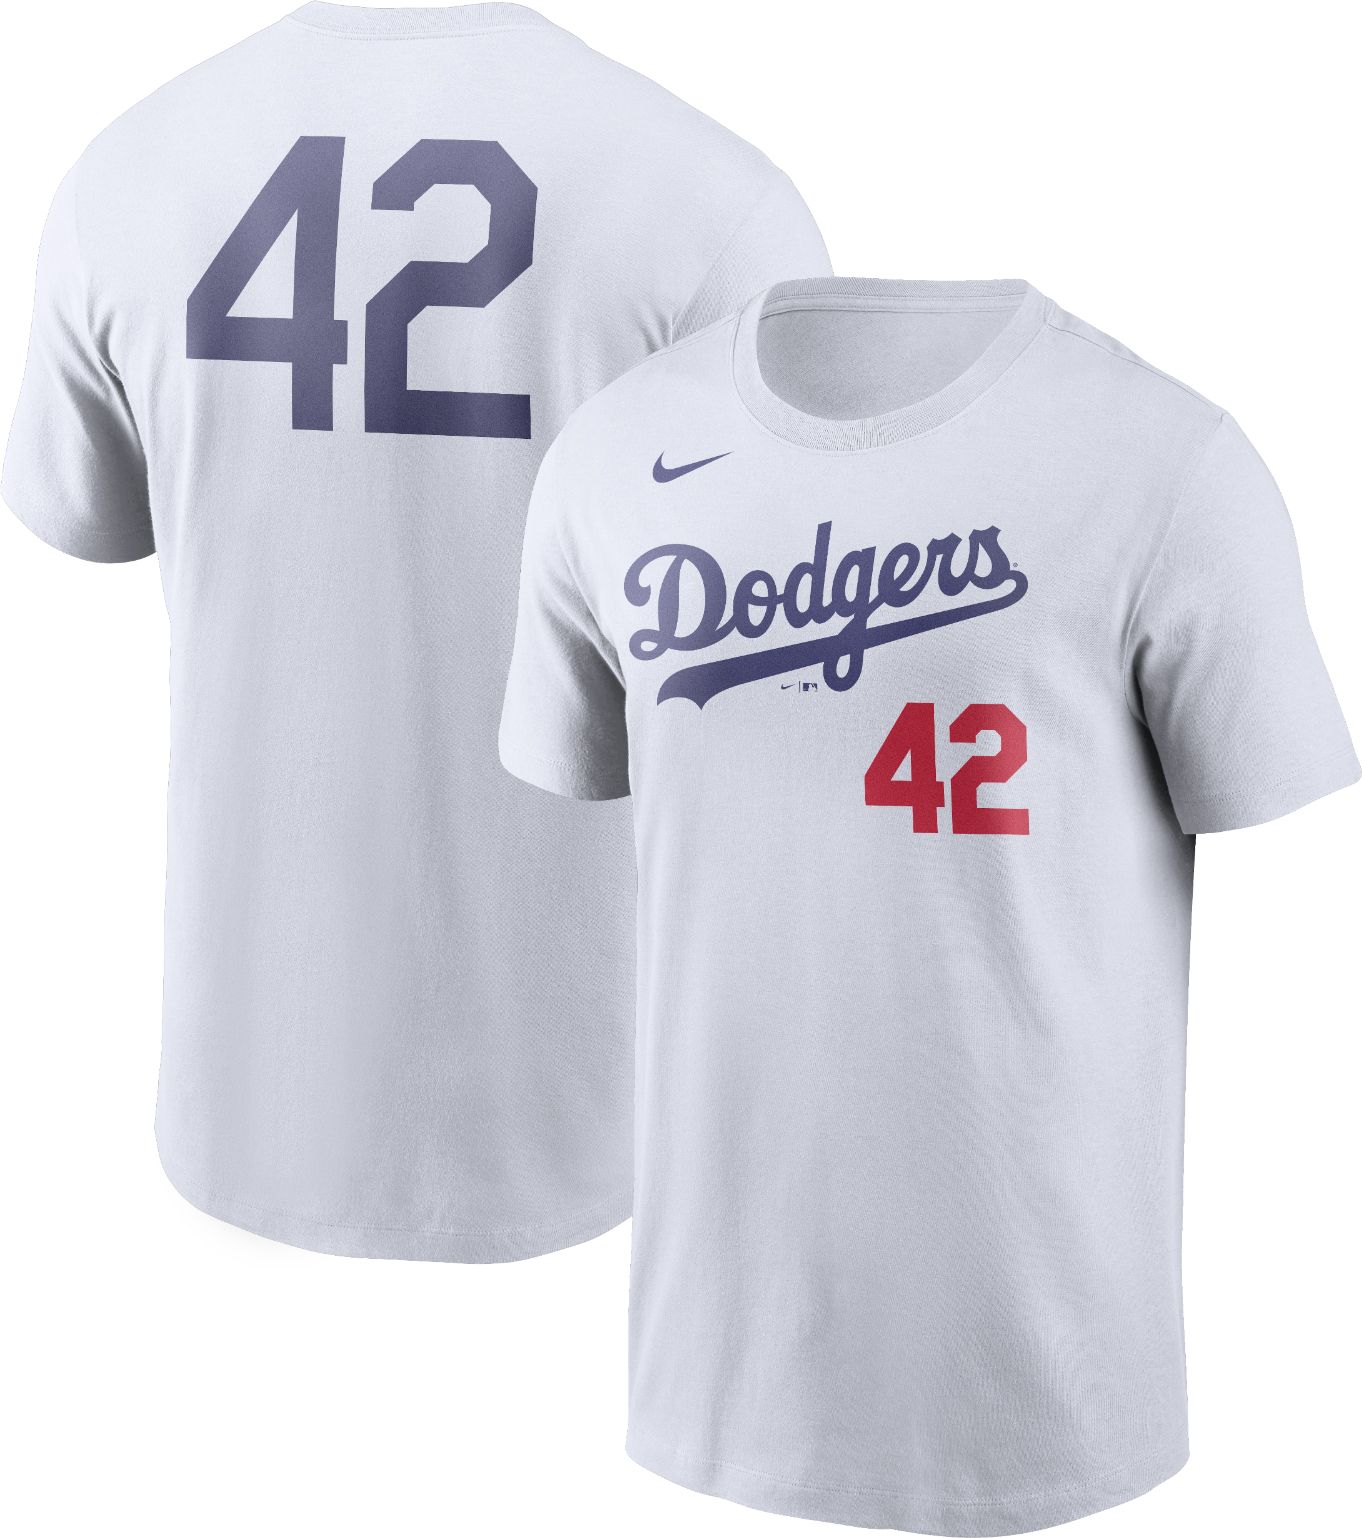 Nike / Men's Los Angeles Dodgers Jackie Robinson #42 White T-Shirt